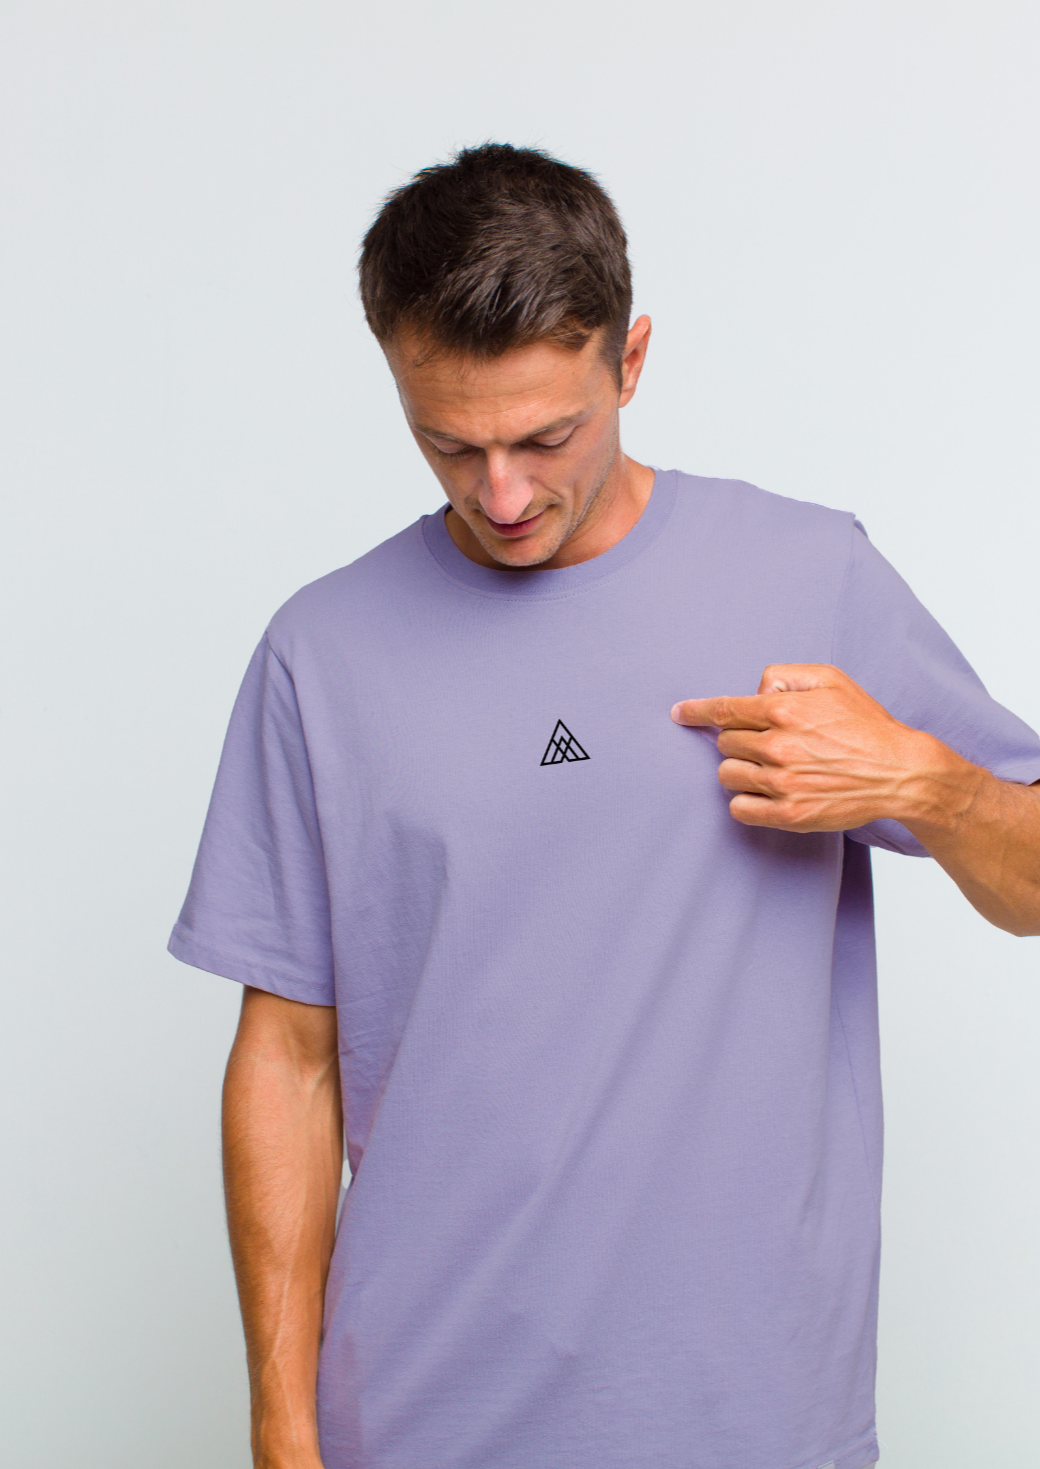 purple oversized t shirt for man